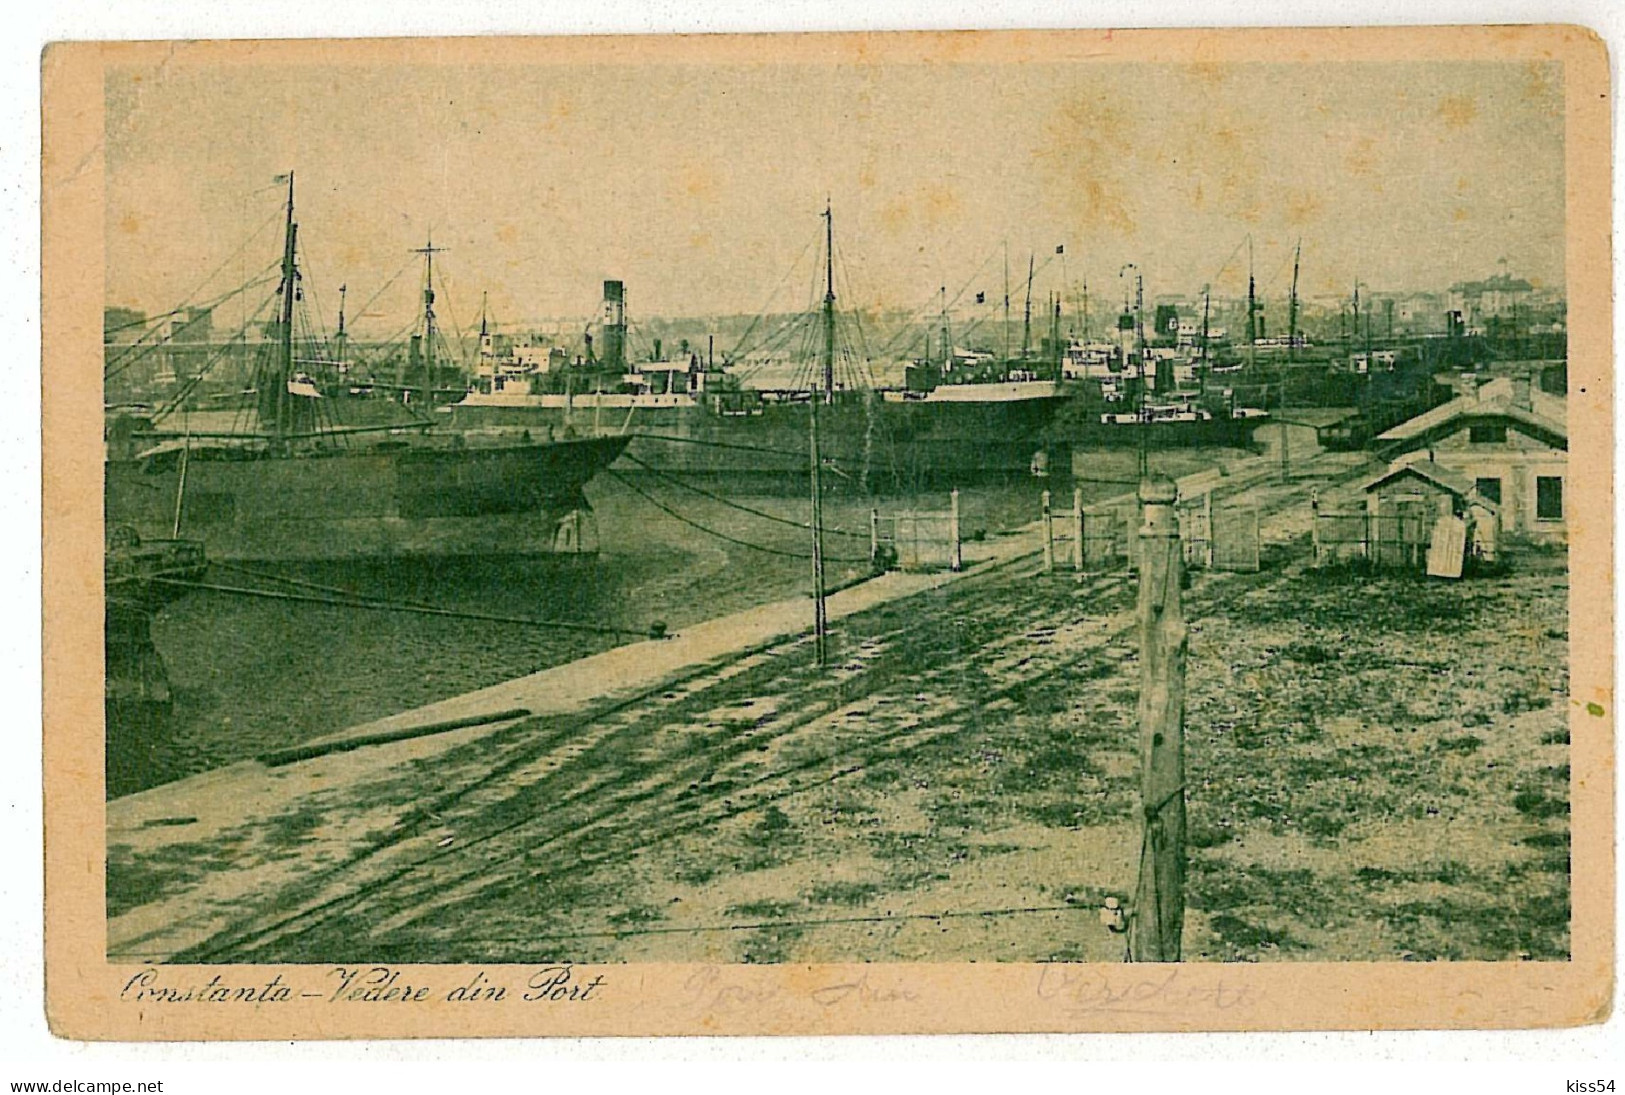 RO 33 - 3325  CONSTANTA, Harbor, Romania - Old Postcard - Used - 1928 - Roumanie